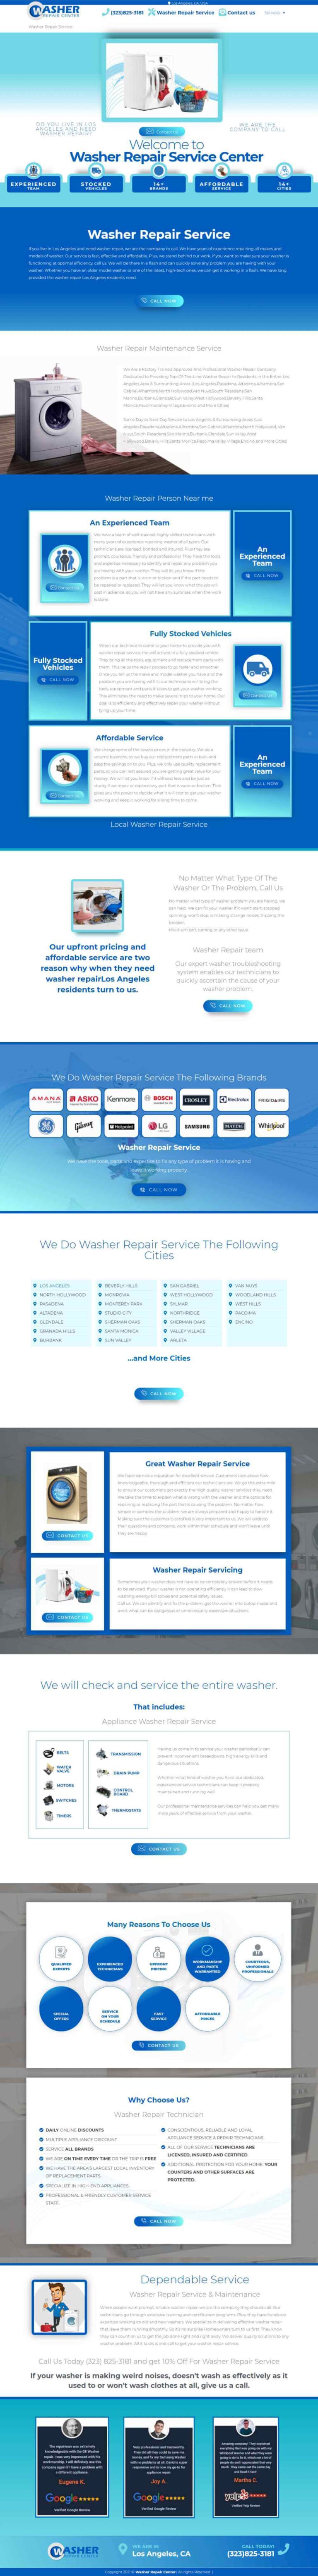 Washer Repair Center Website Design